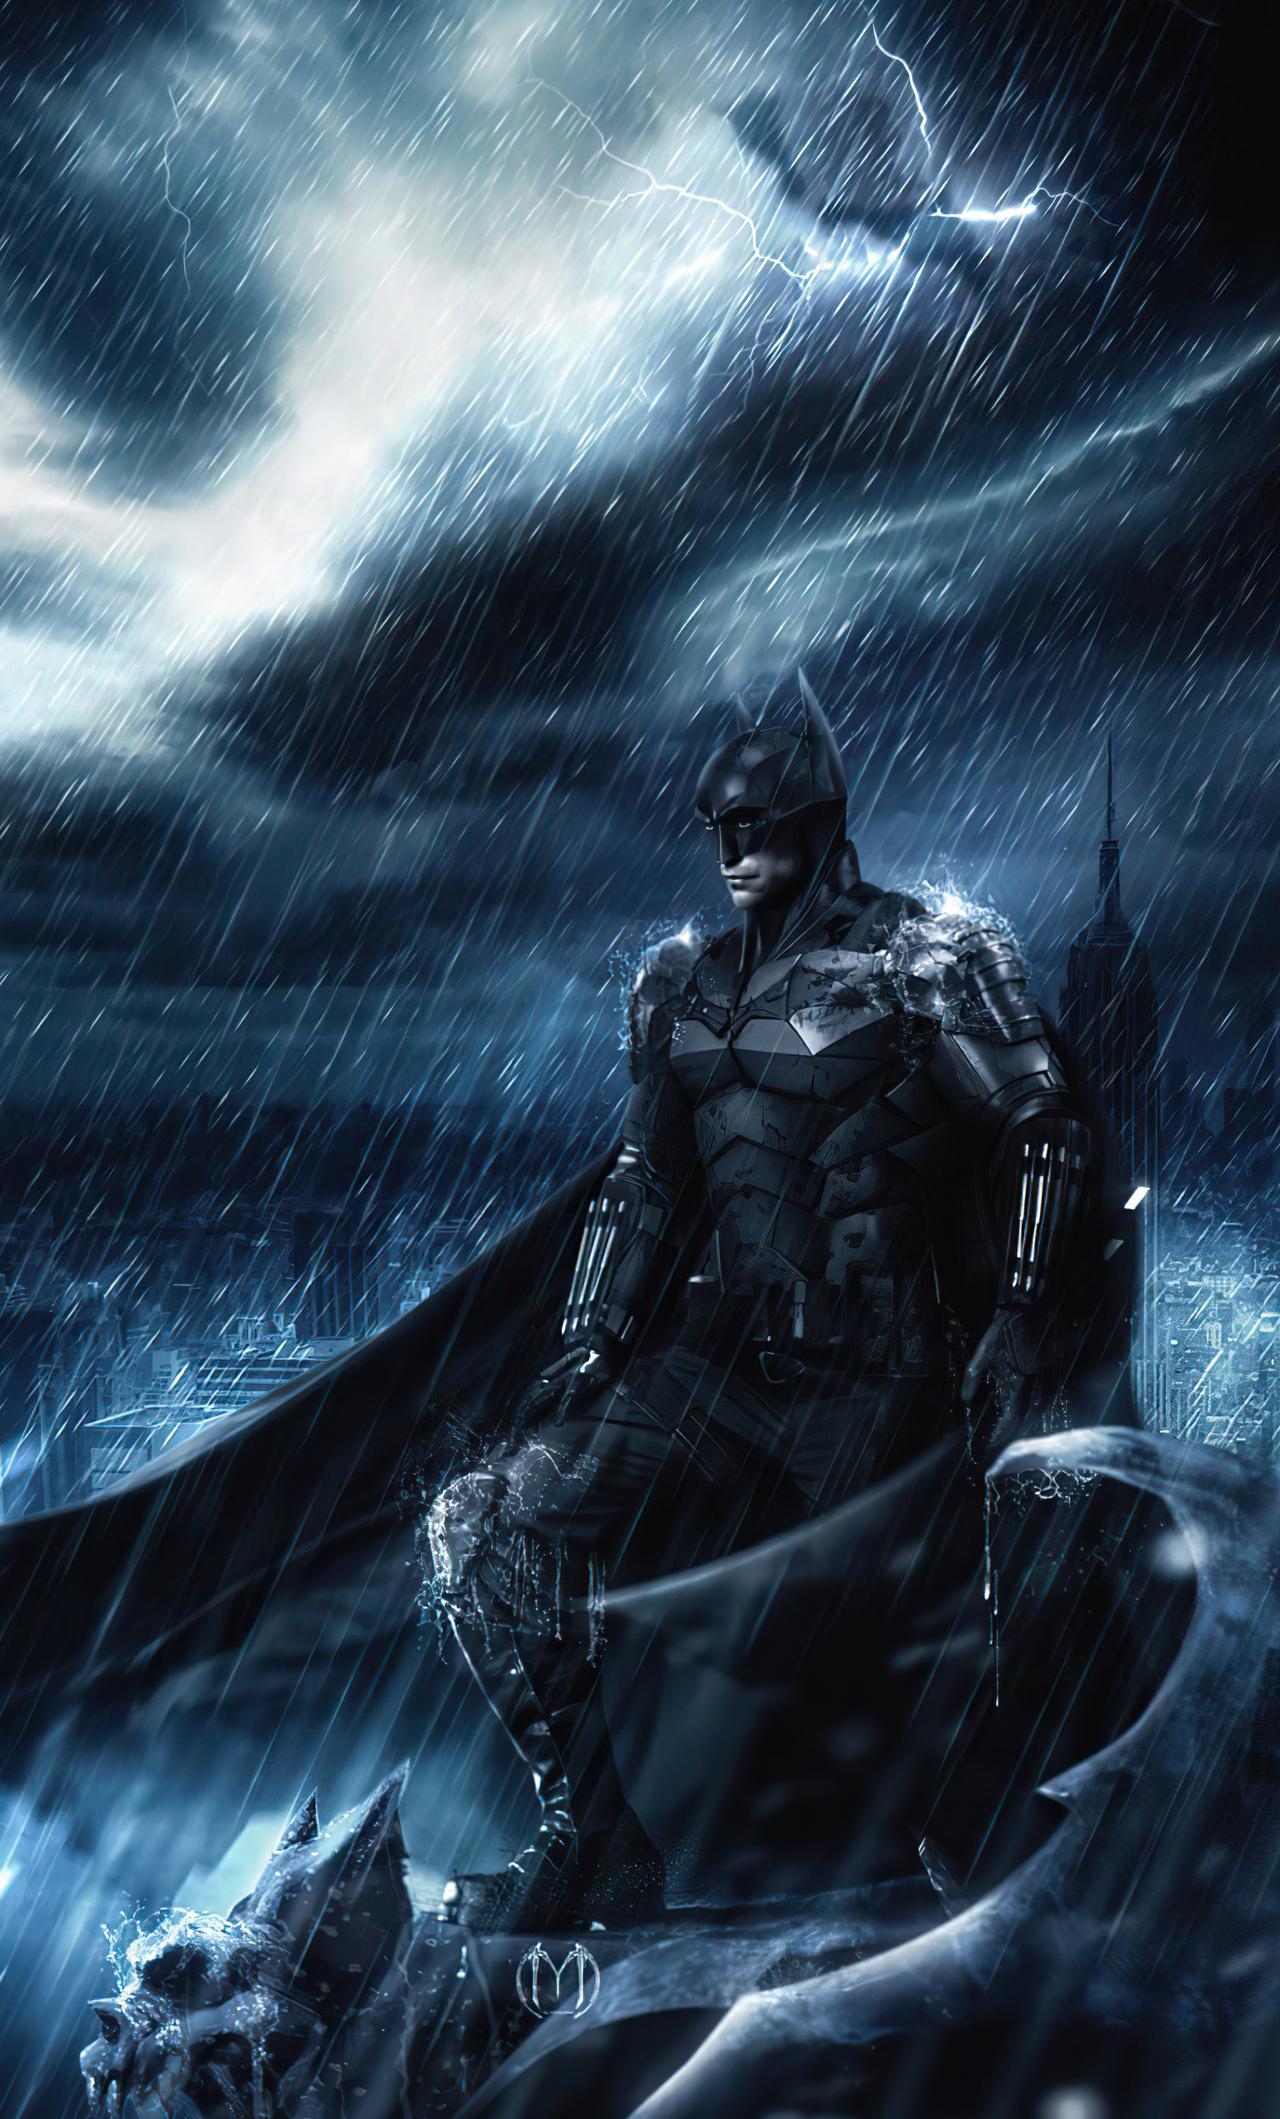 Batman In Night 4k iPhone HD Wallpaper Image